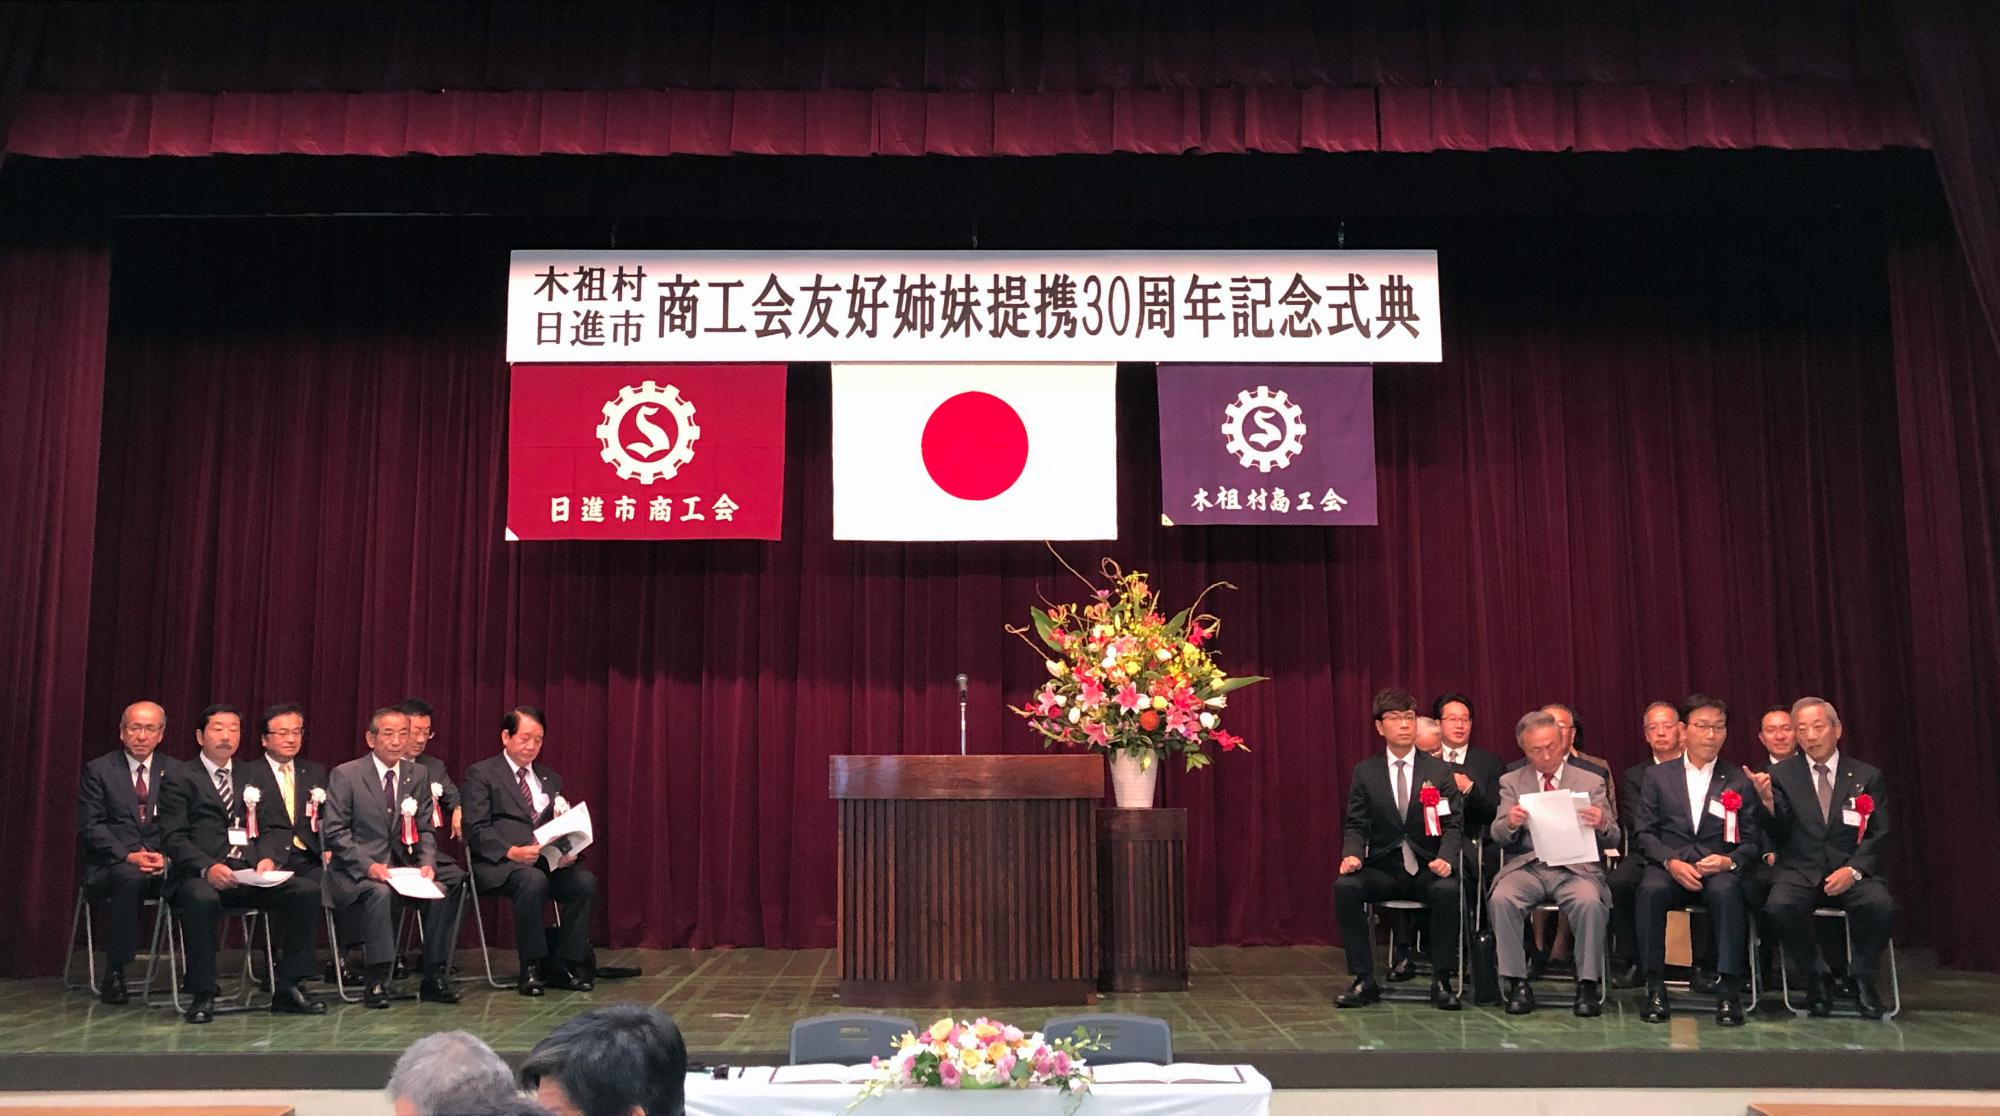 木祖村と日進市の商工会友好姉妹提携30周年記念式典の様子